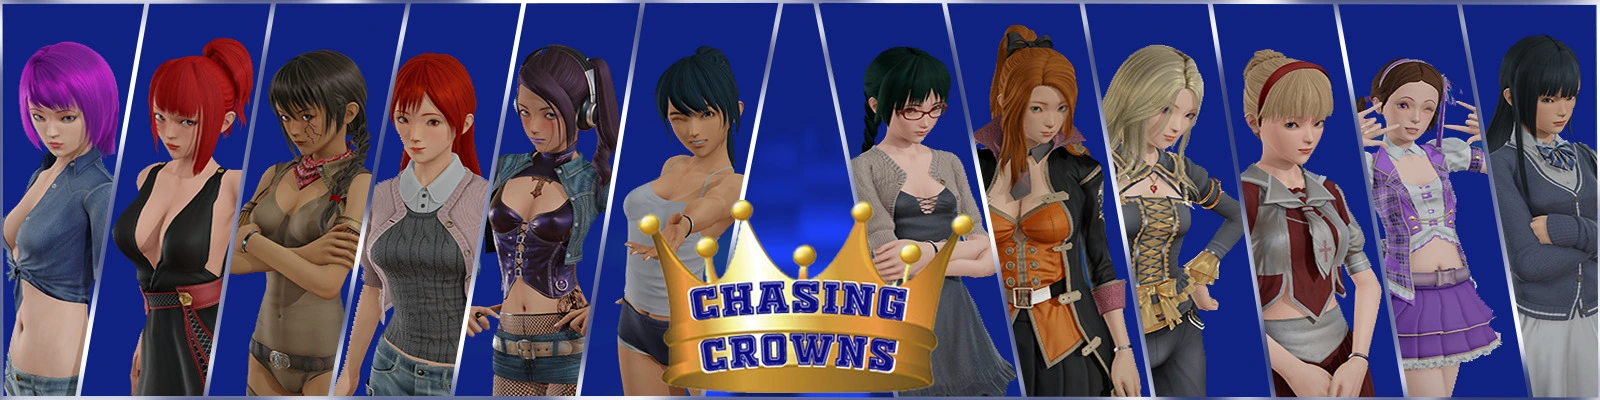 Chasing Crowns main image